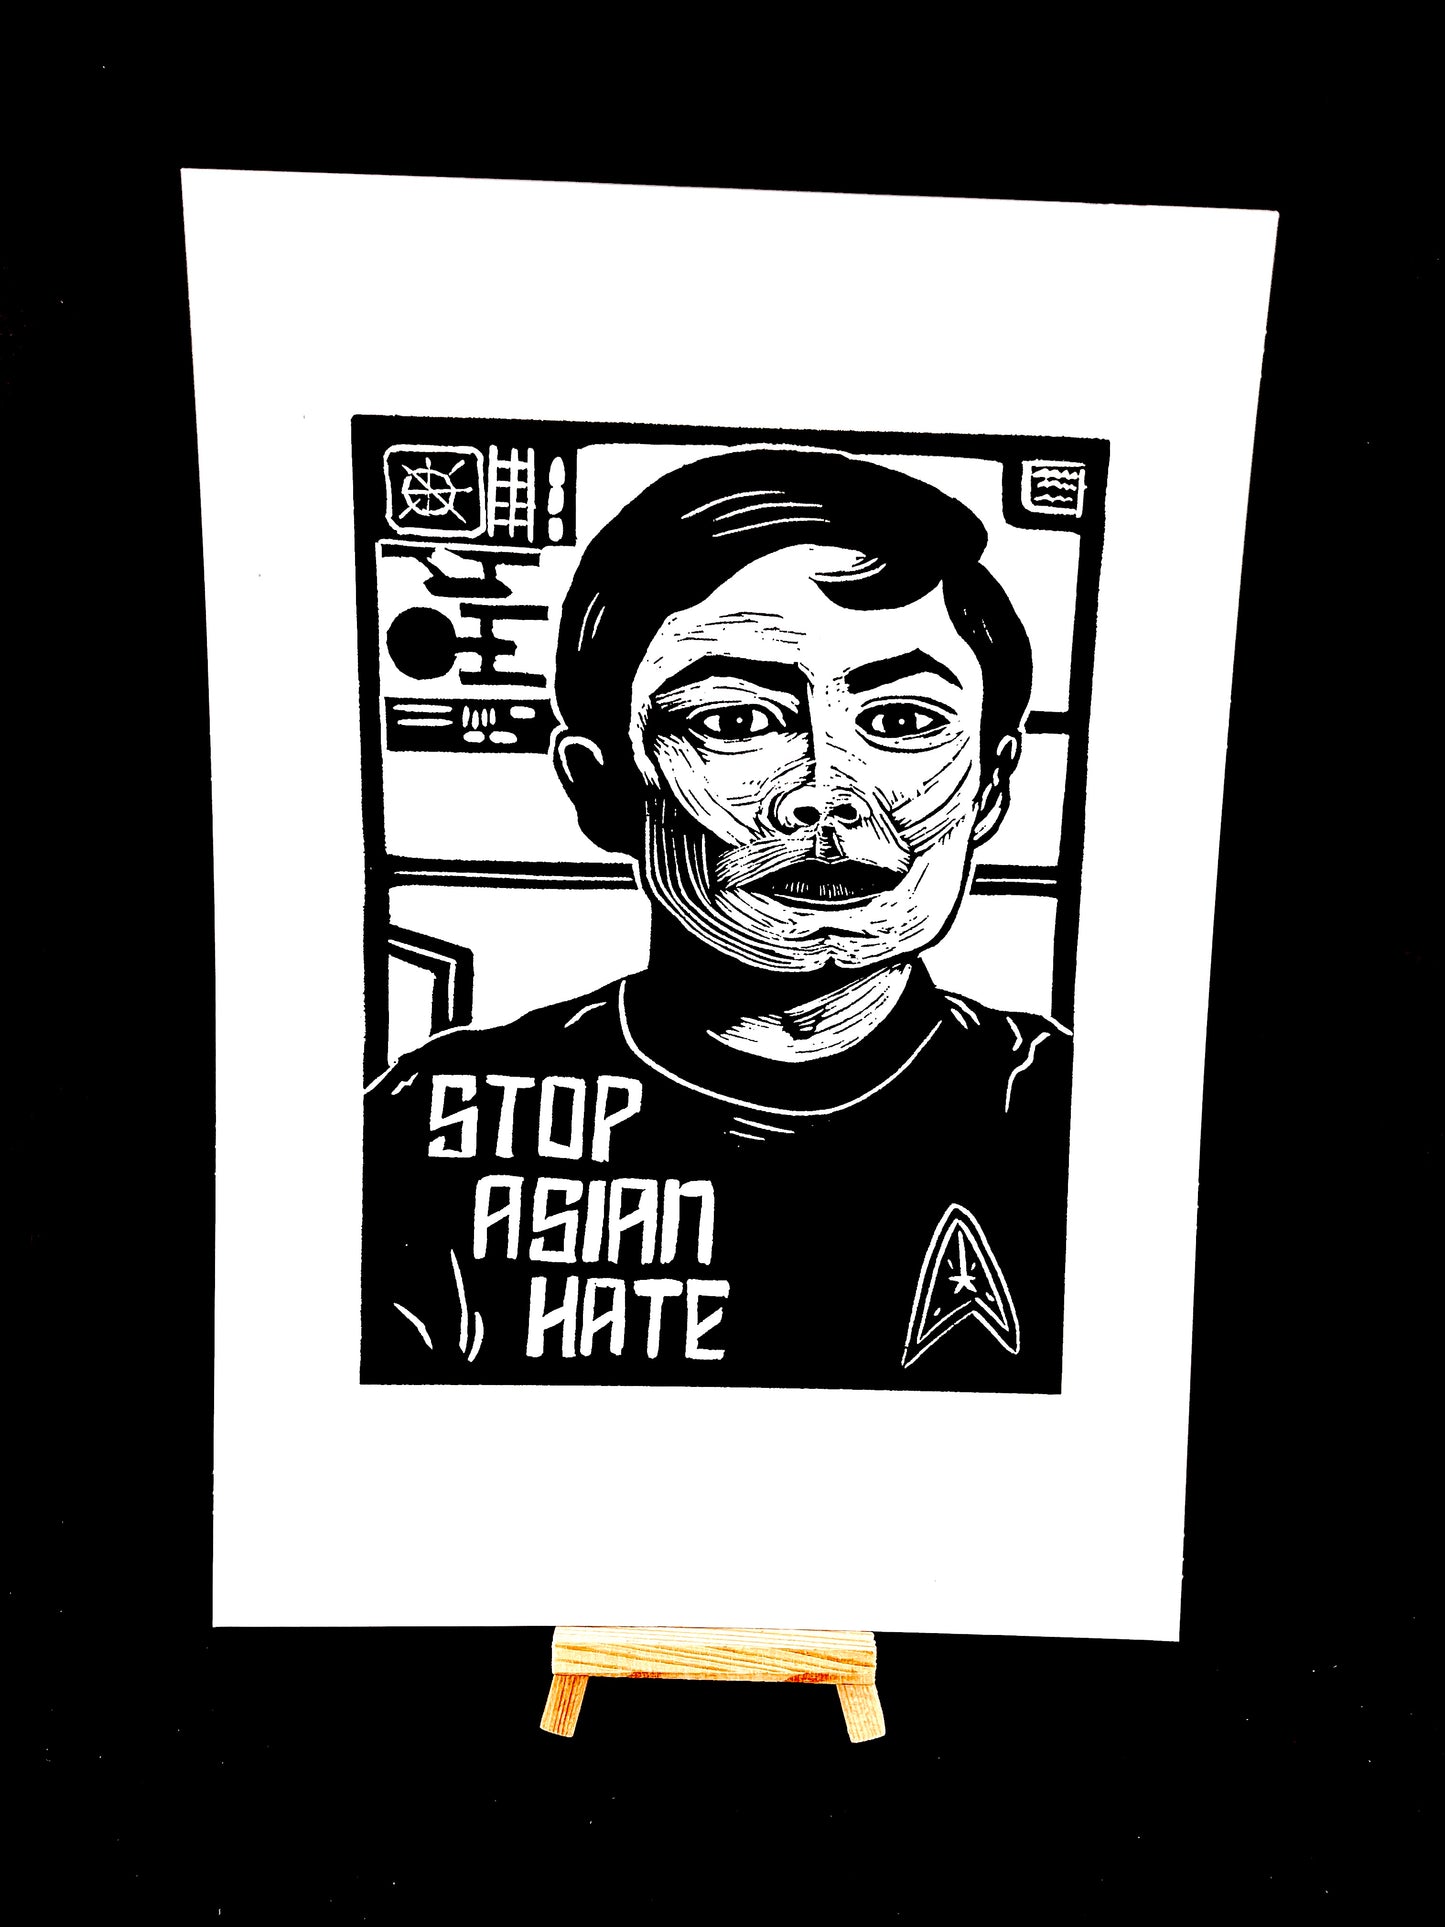 Lieutenant Sulu - George Takei - Star Trek "Stop Asian Hate" - Screen Print